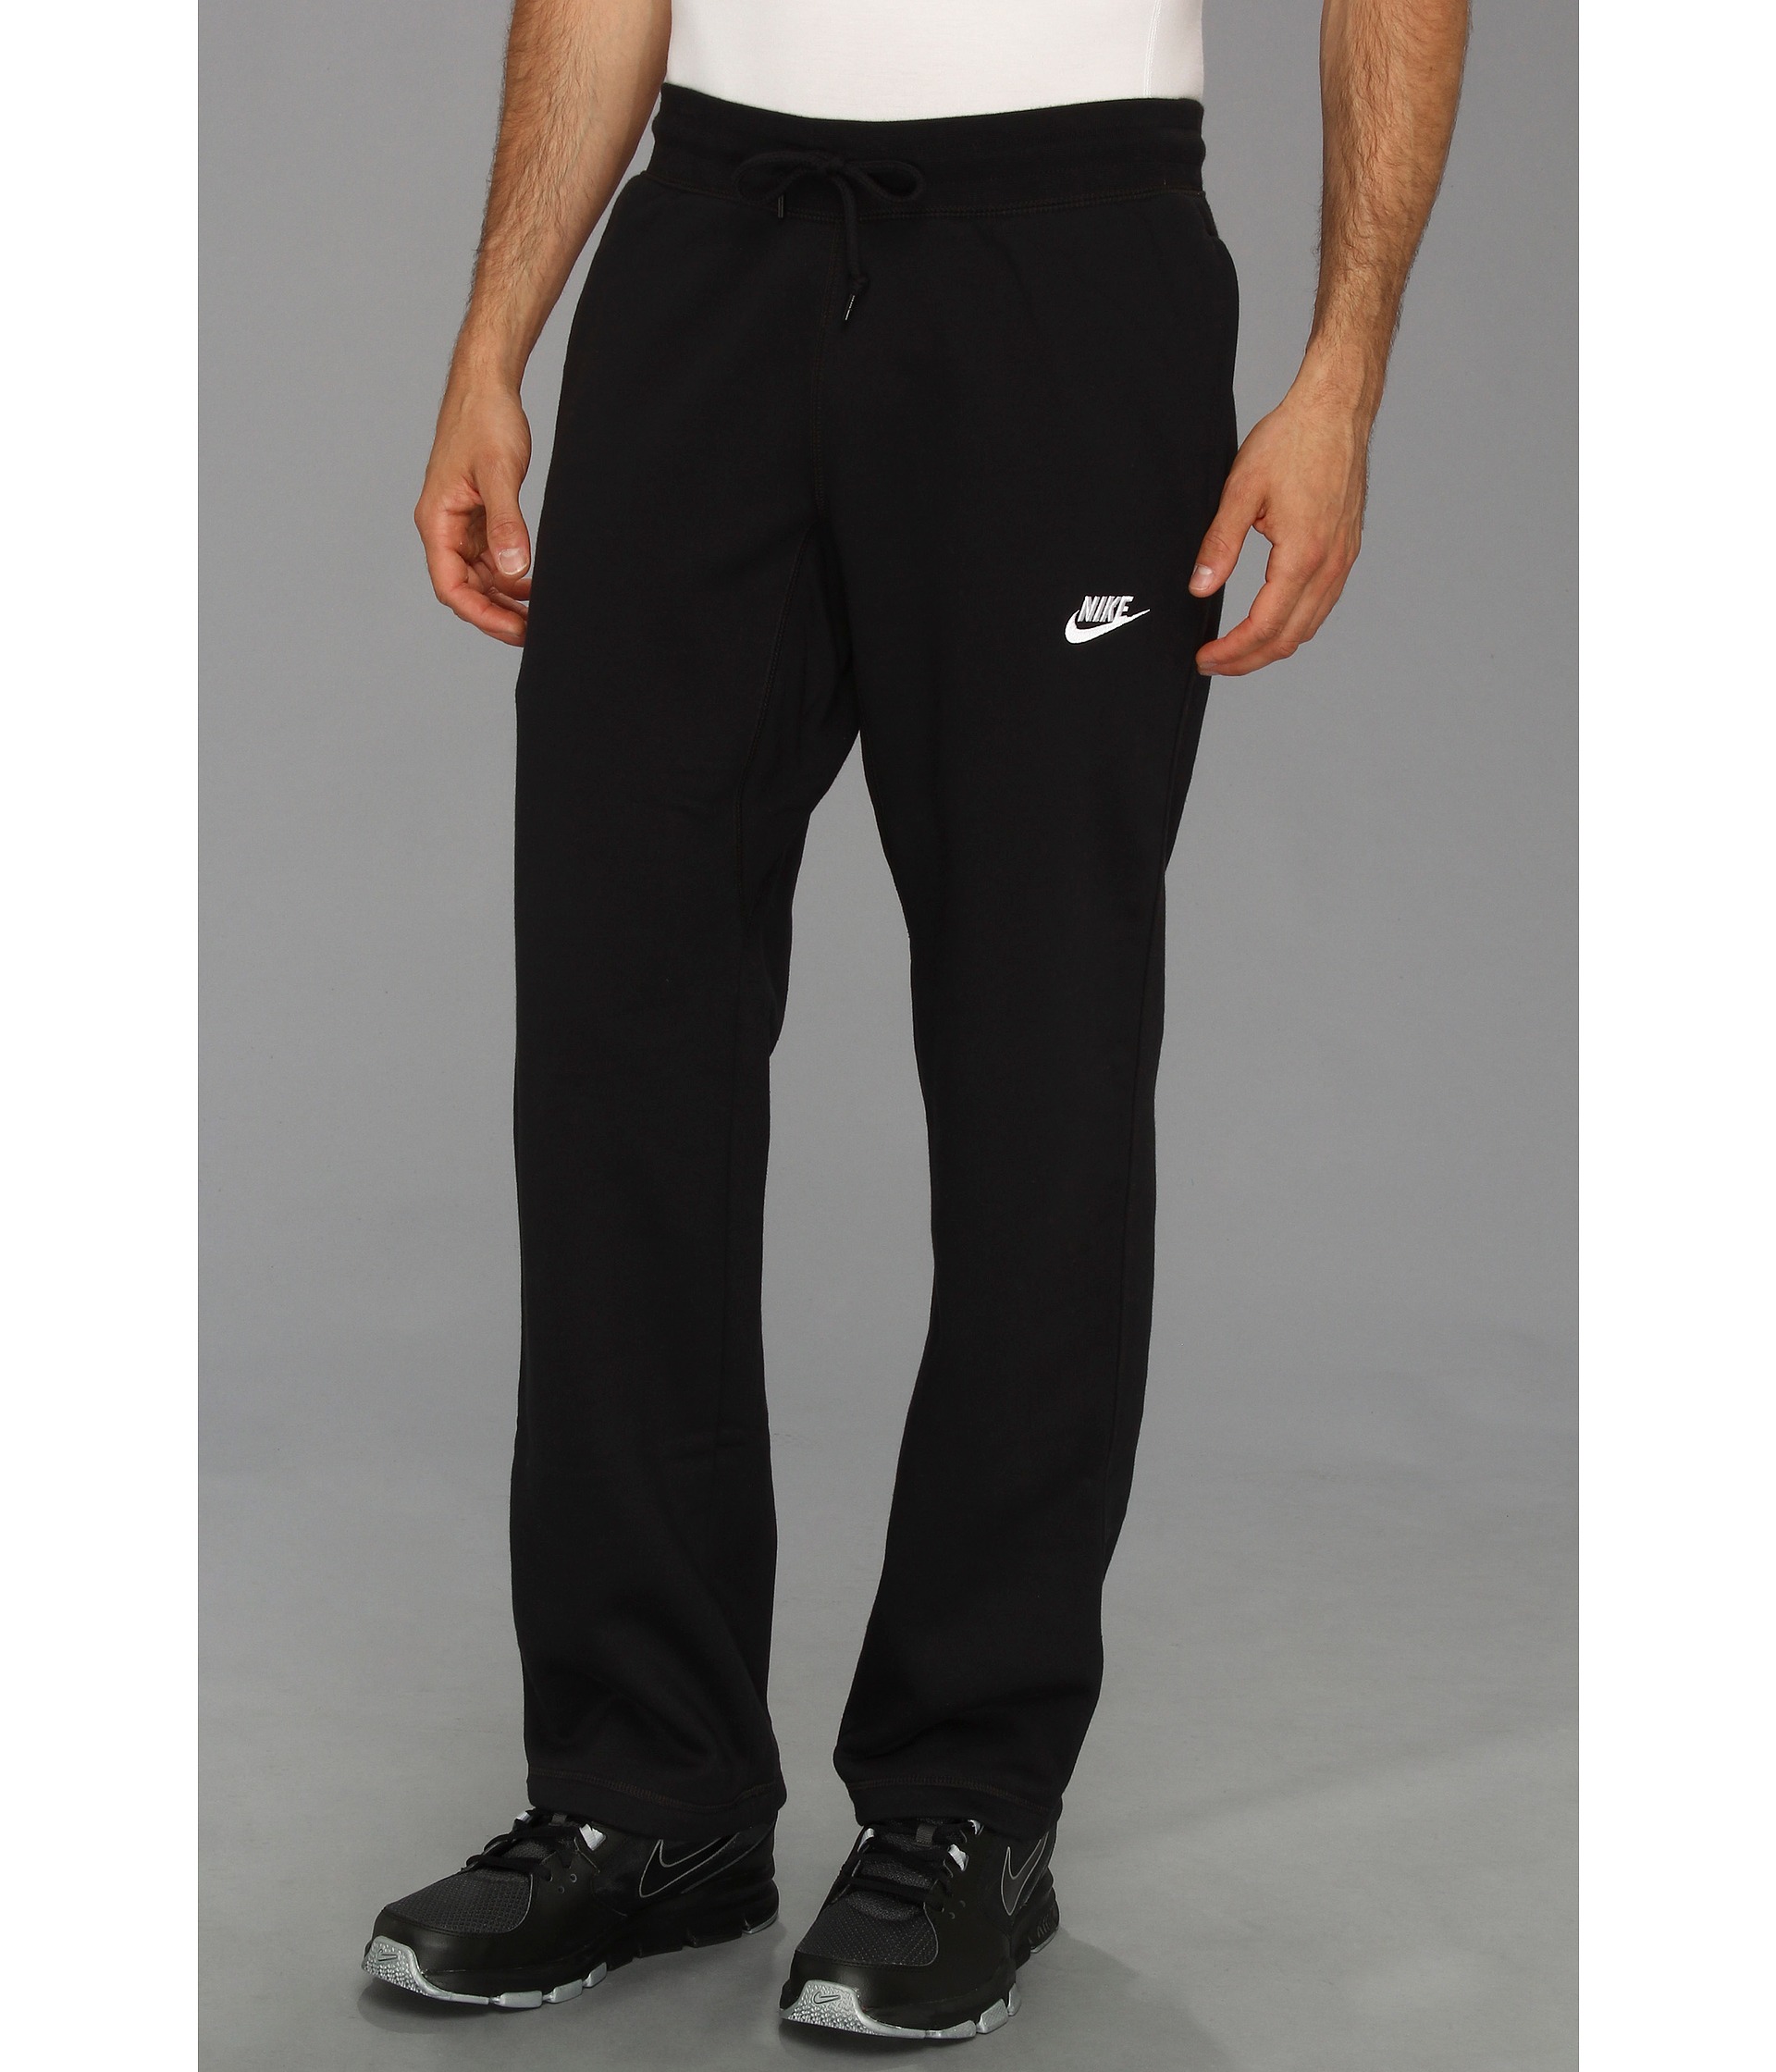 Nike Ace Open Hem Fleece Pant, Clothing | Shipped Free at Zappos